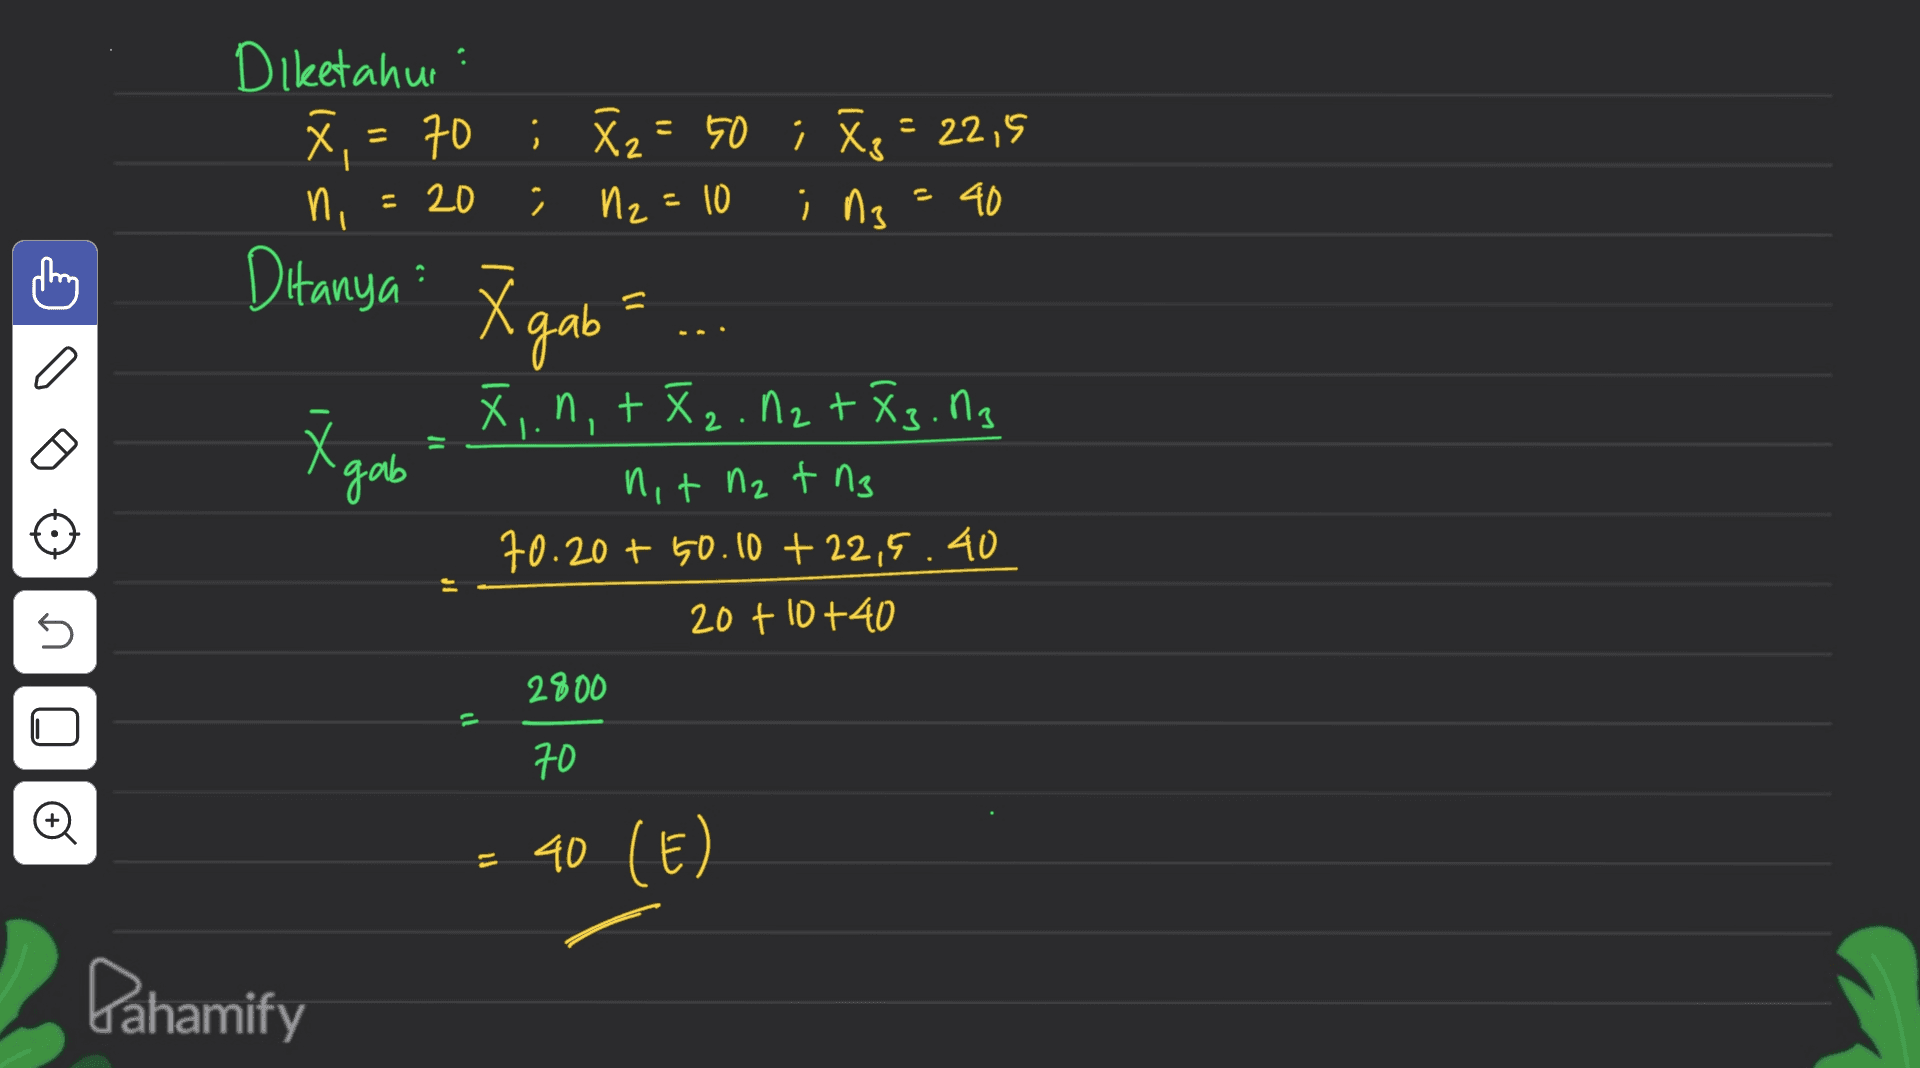 Diketahui X , - 70 ; 8z = 50 ; Te = 22,5 N2 =10 ing = 40 ni = 20 Ditanya: Xgab 1) a 'gab X,.n,+ X2 . N2 + X3.03 nit n2 t ng 70.20 + 50.10 + 22,5.40 20+ 10+40 s 2800 Oo 70 = 40 (E) Pahamify 